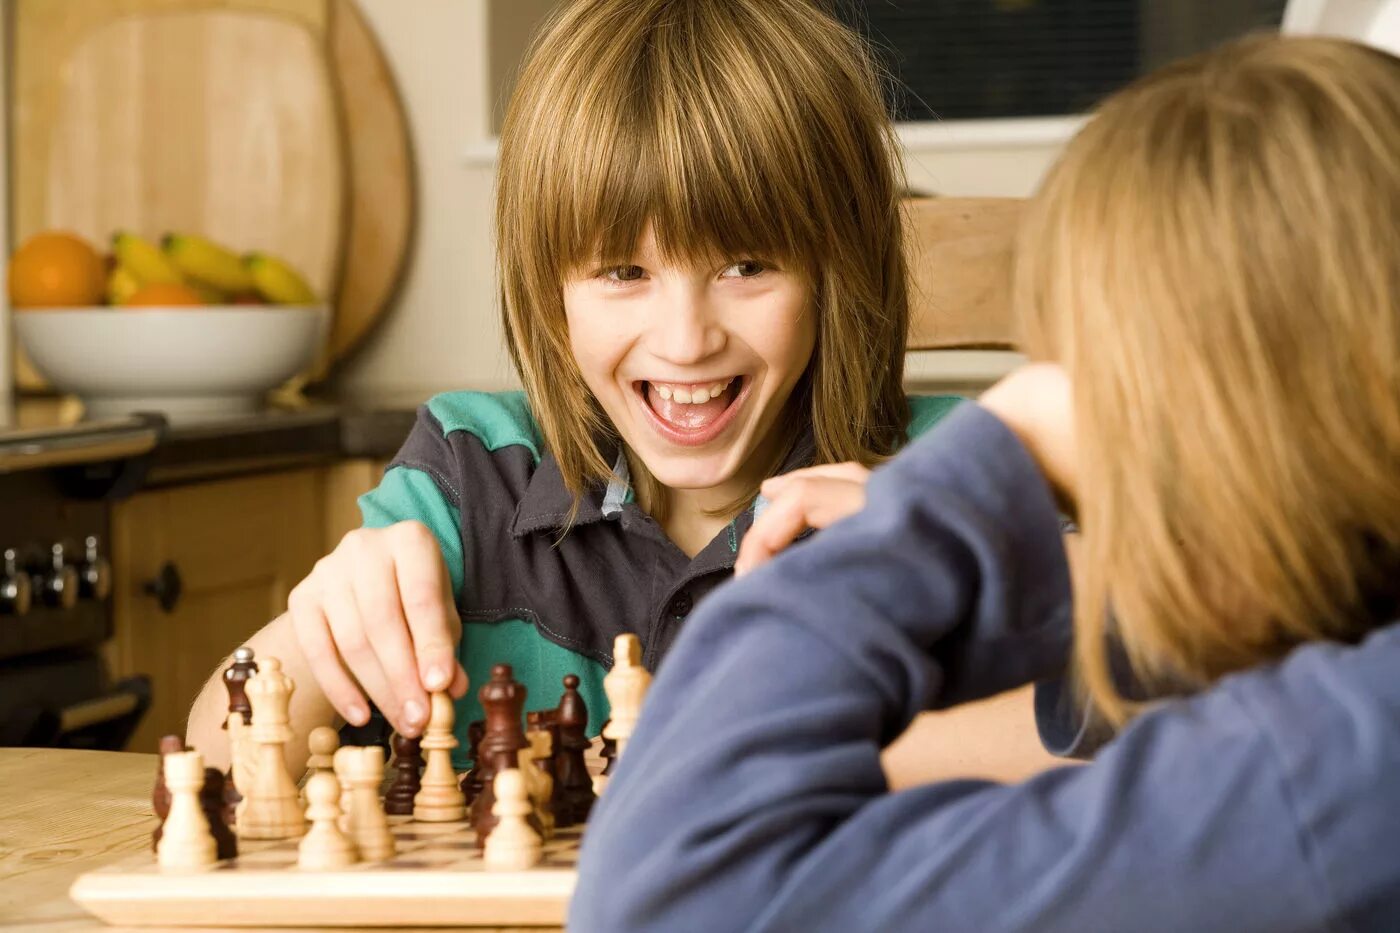 Ребята шахматы играют. Шахматы для детей. Игра в шахматы дети. Дети играющие в шахматы. Дети играют в настольные игры.